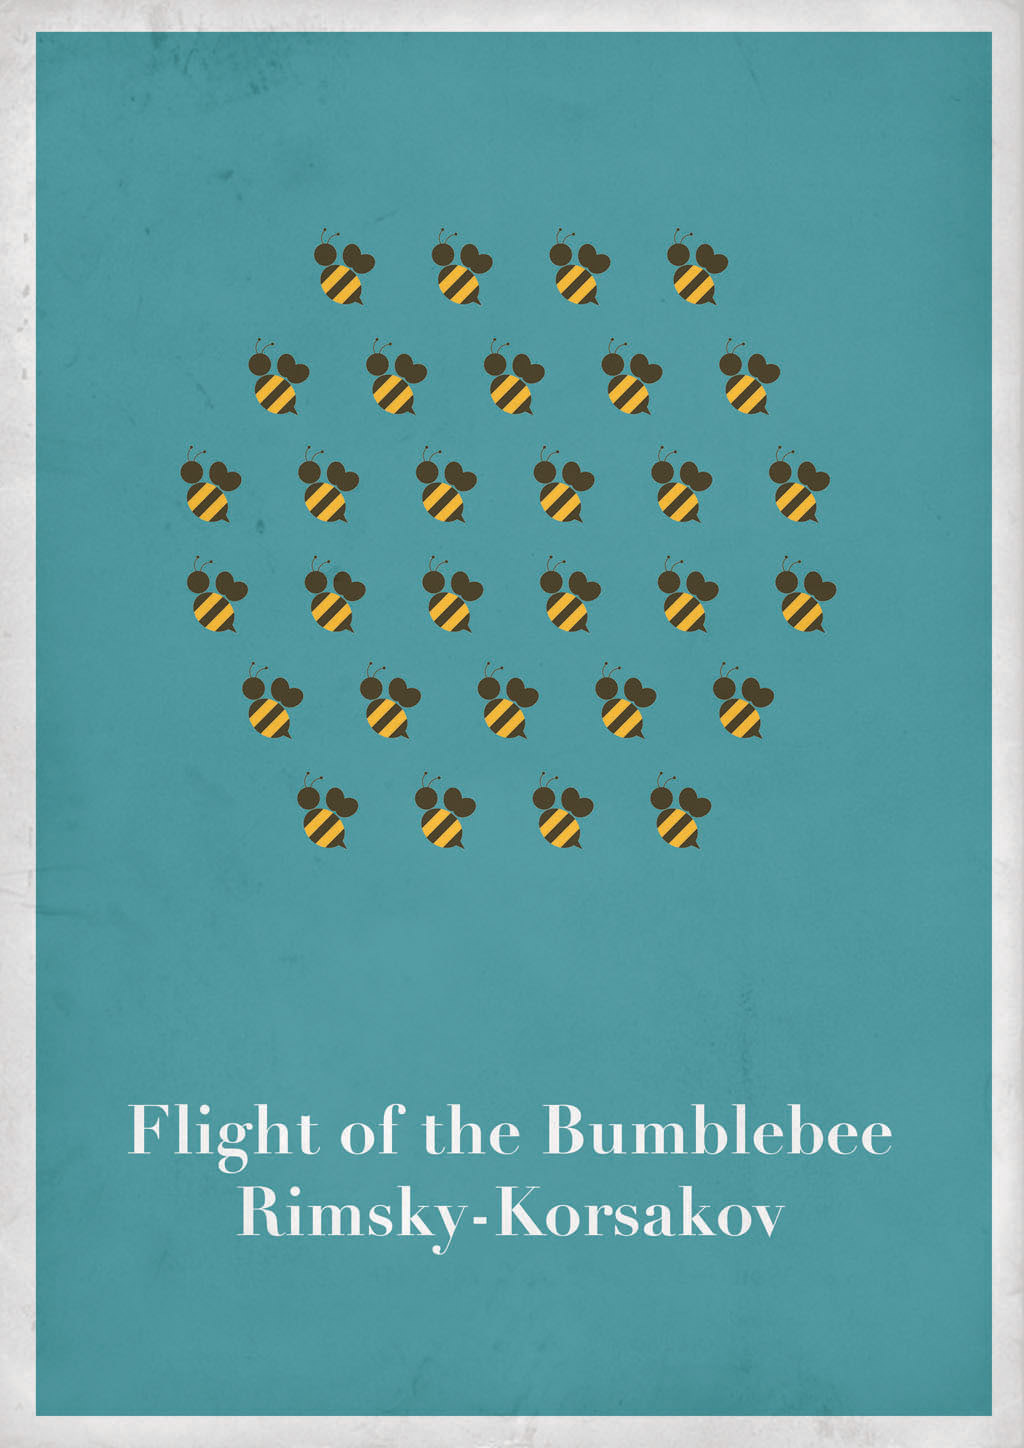 Nature boy etta james miles davis rimsky-korsakov Bumblebee poster minimalist song Lyrics